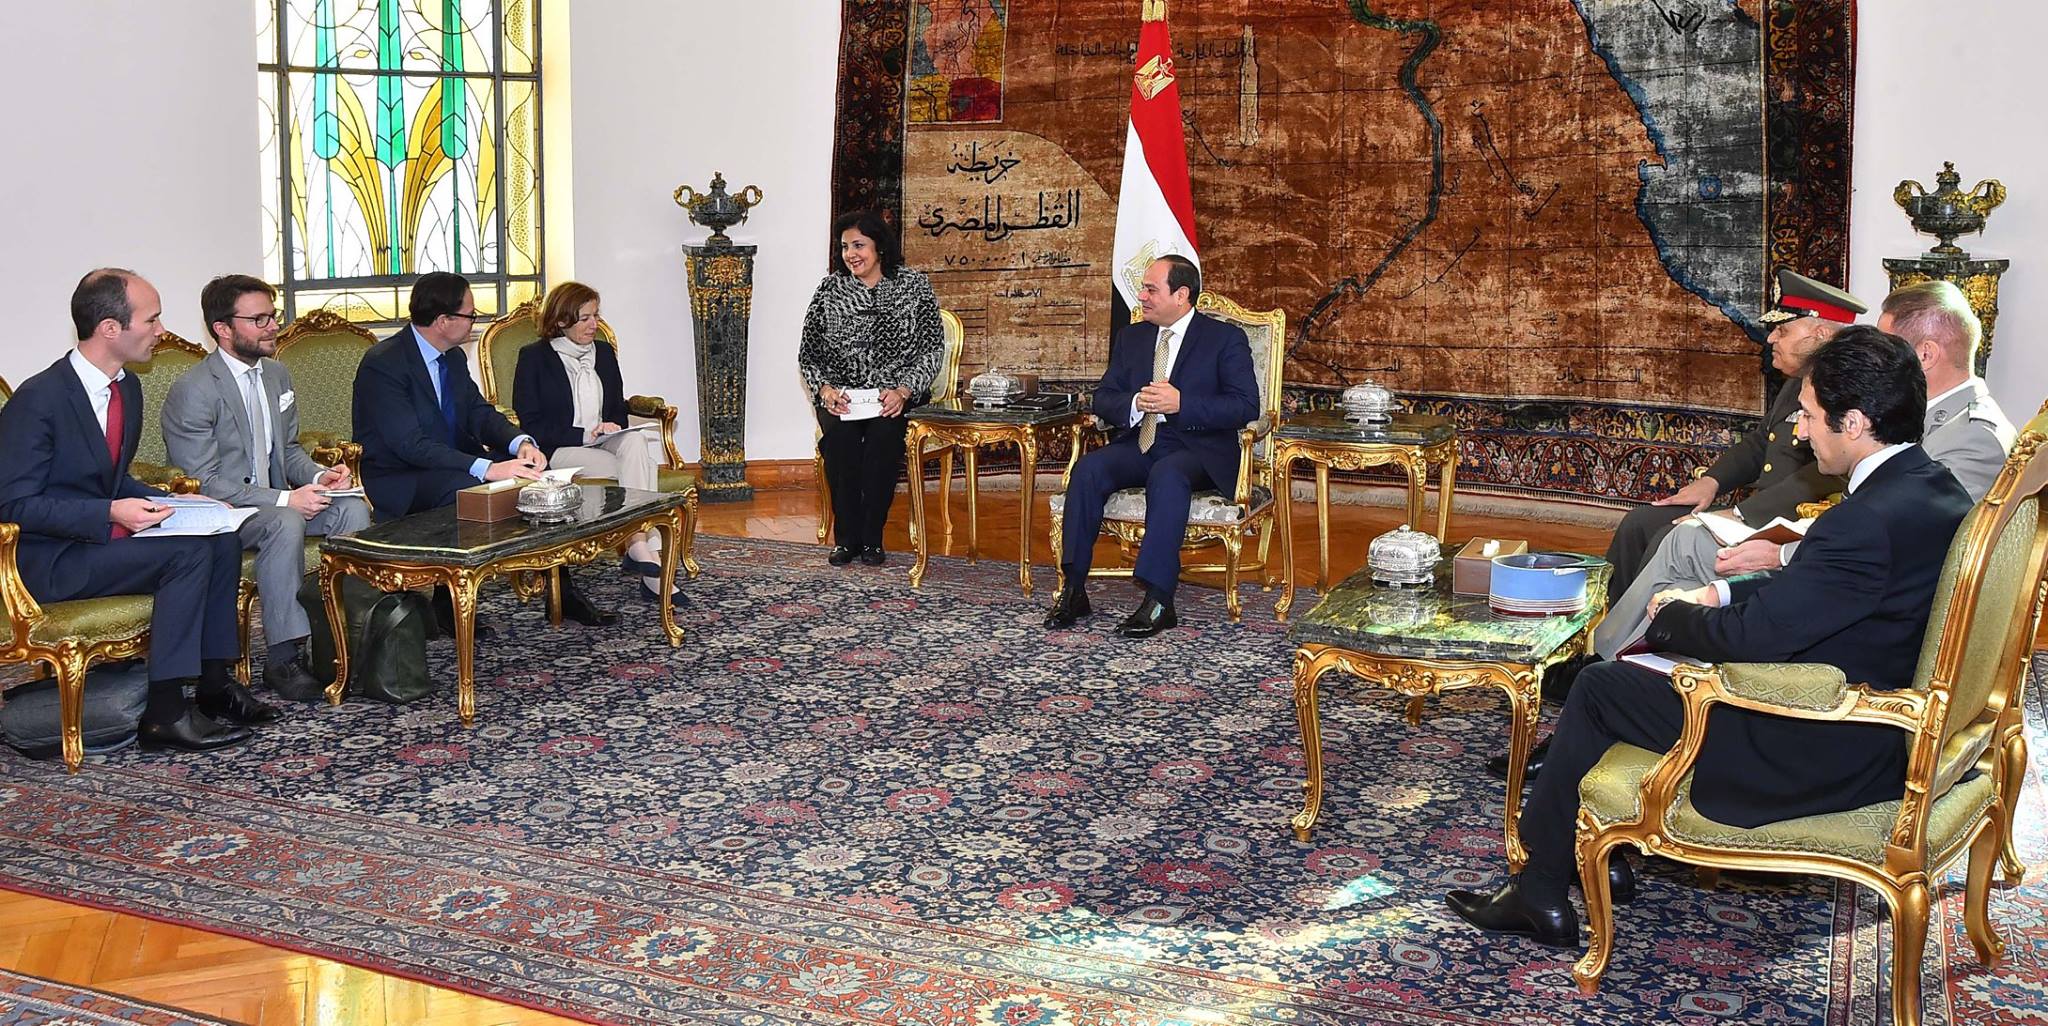 Egyptian President Abdel-Fattah Al-Sisi meets French Defense Minister Jean-Yves Le Drian